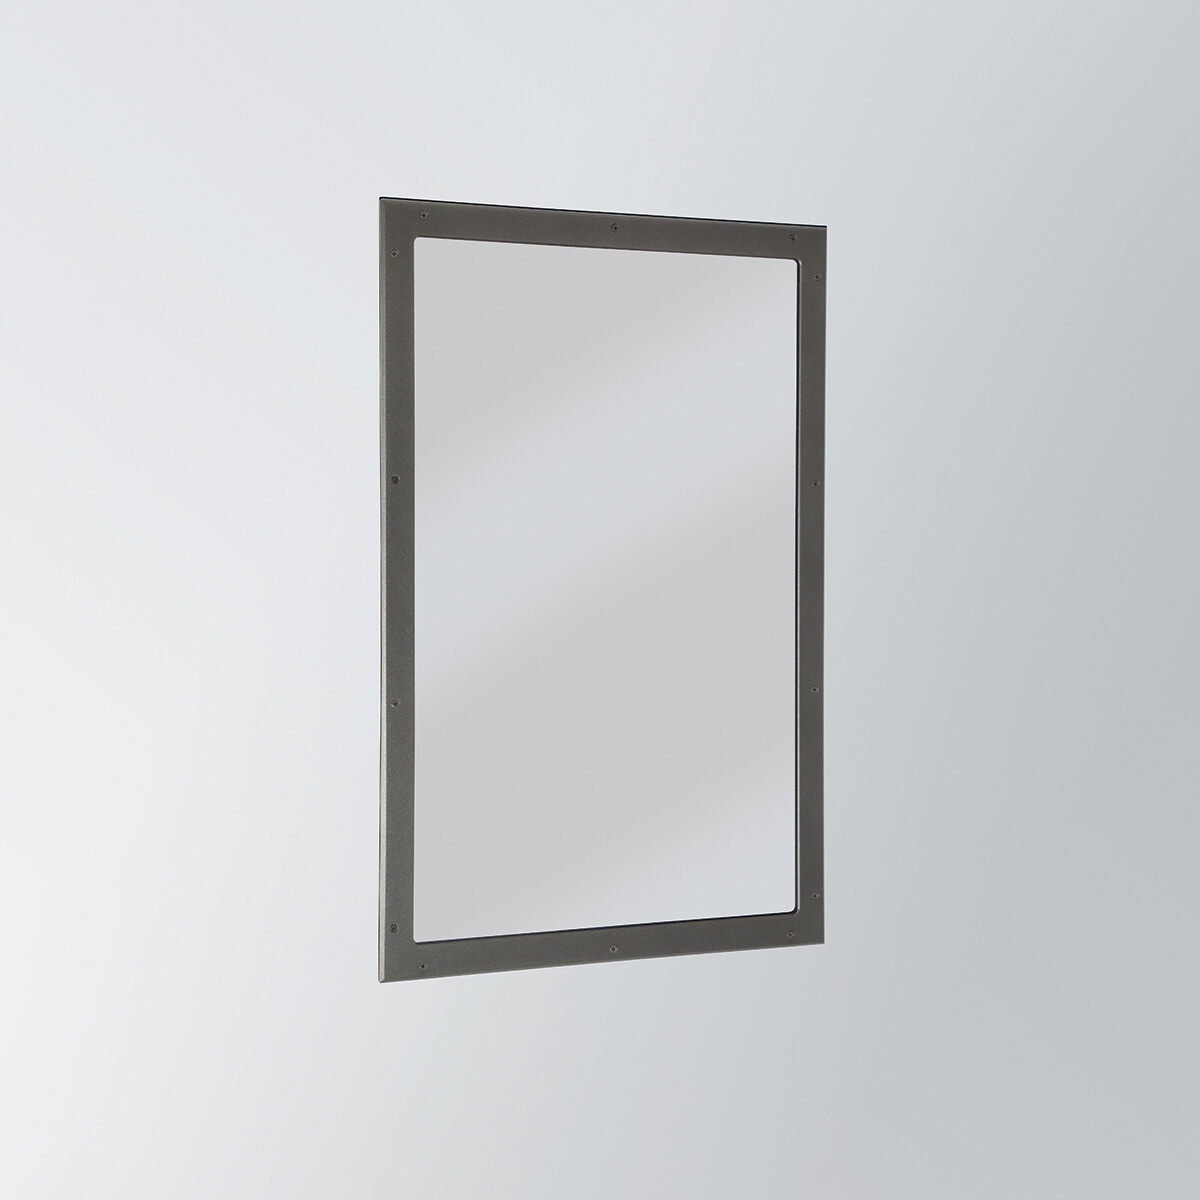 A rectangular mirror